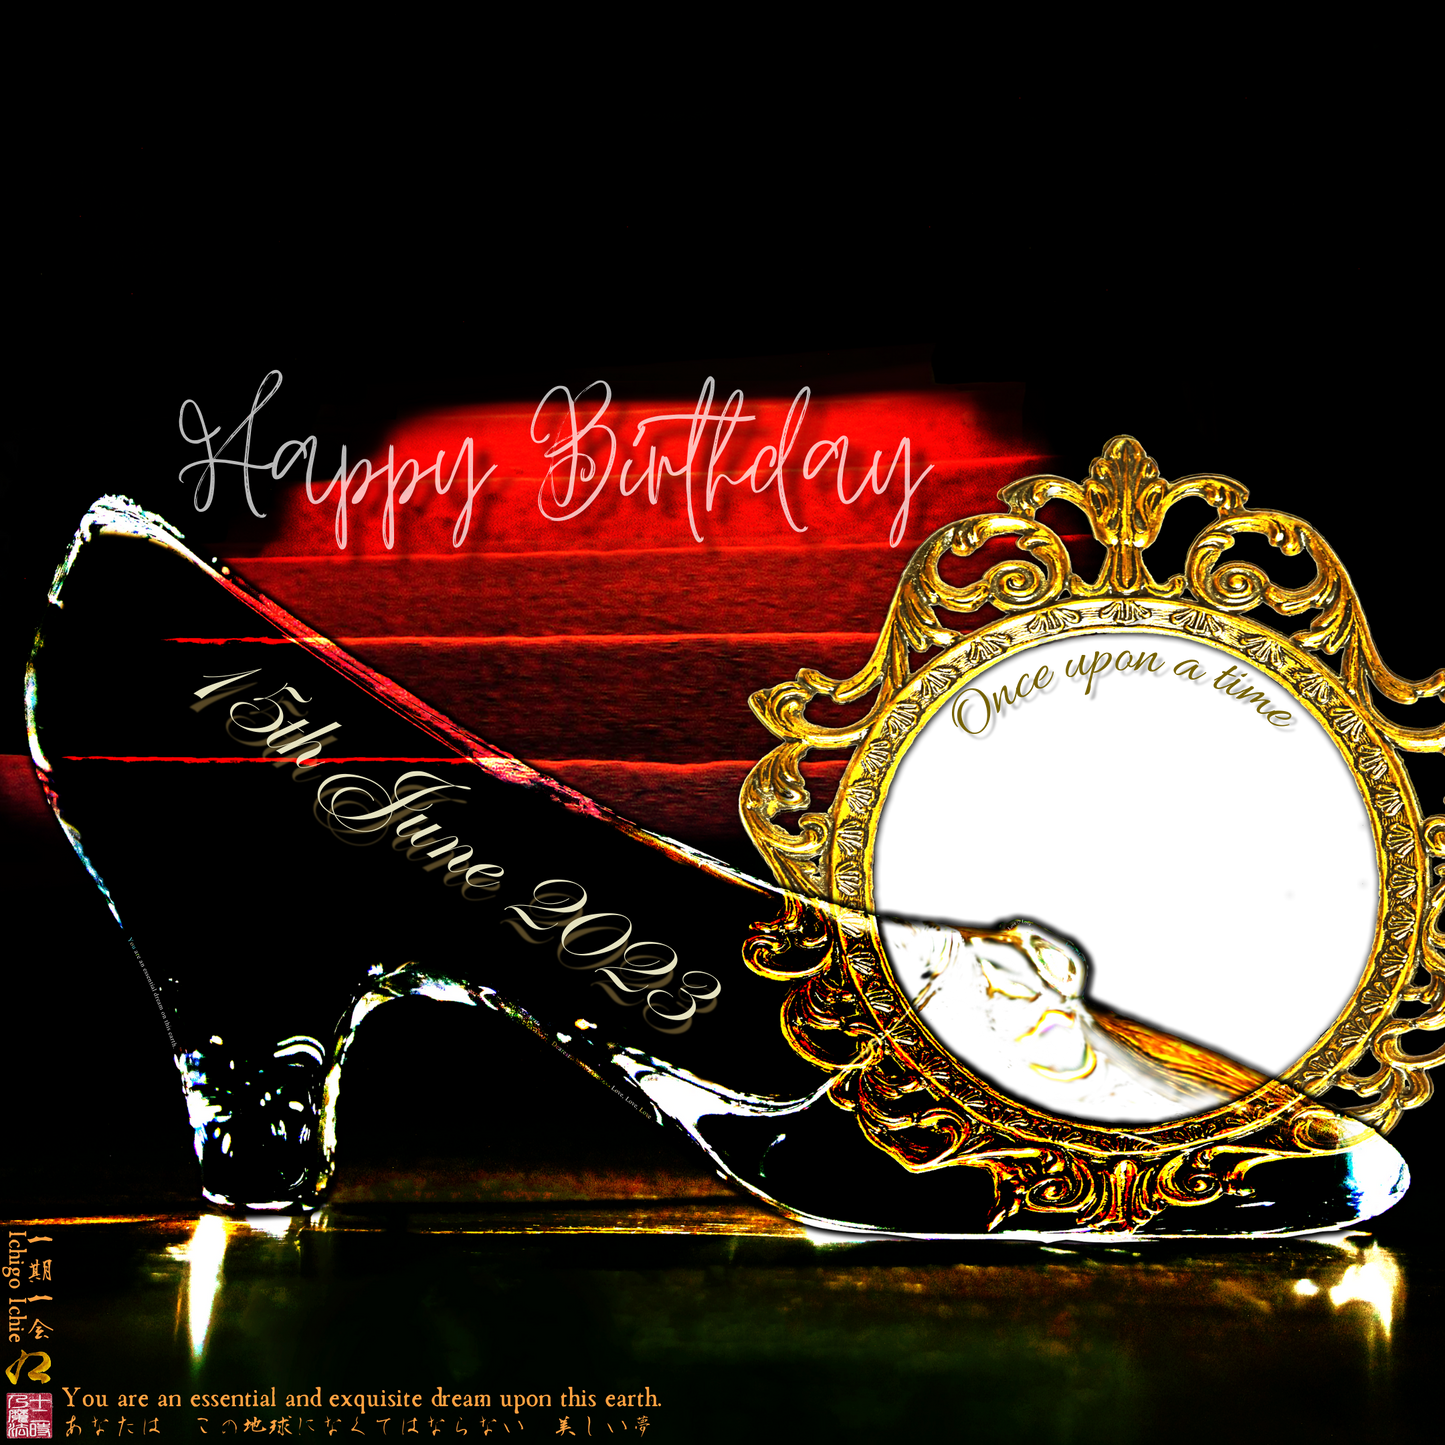 Happy Birthday Glass Slipper "Ichigo Ichie" 15th June 2023 the Right (1-of-1) NFT Art